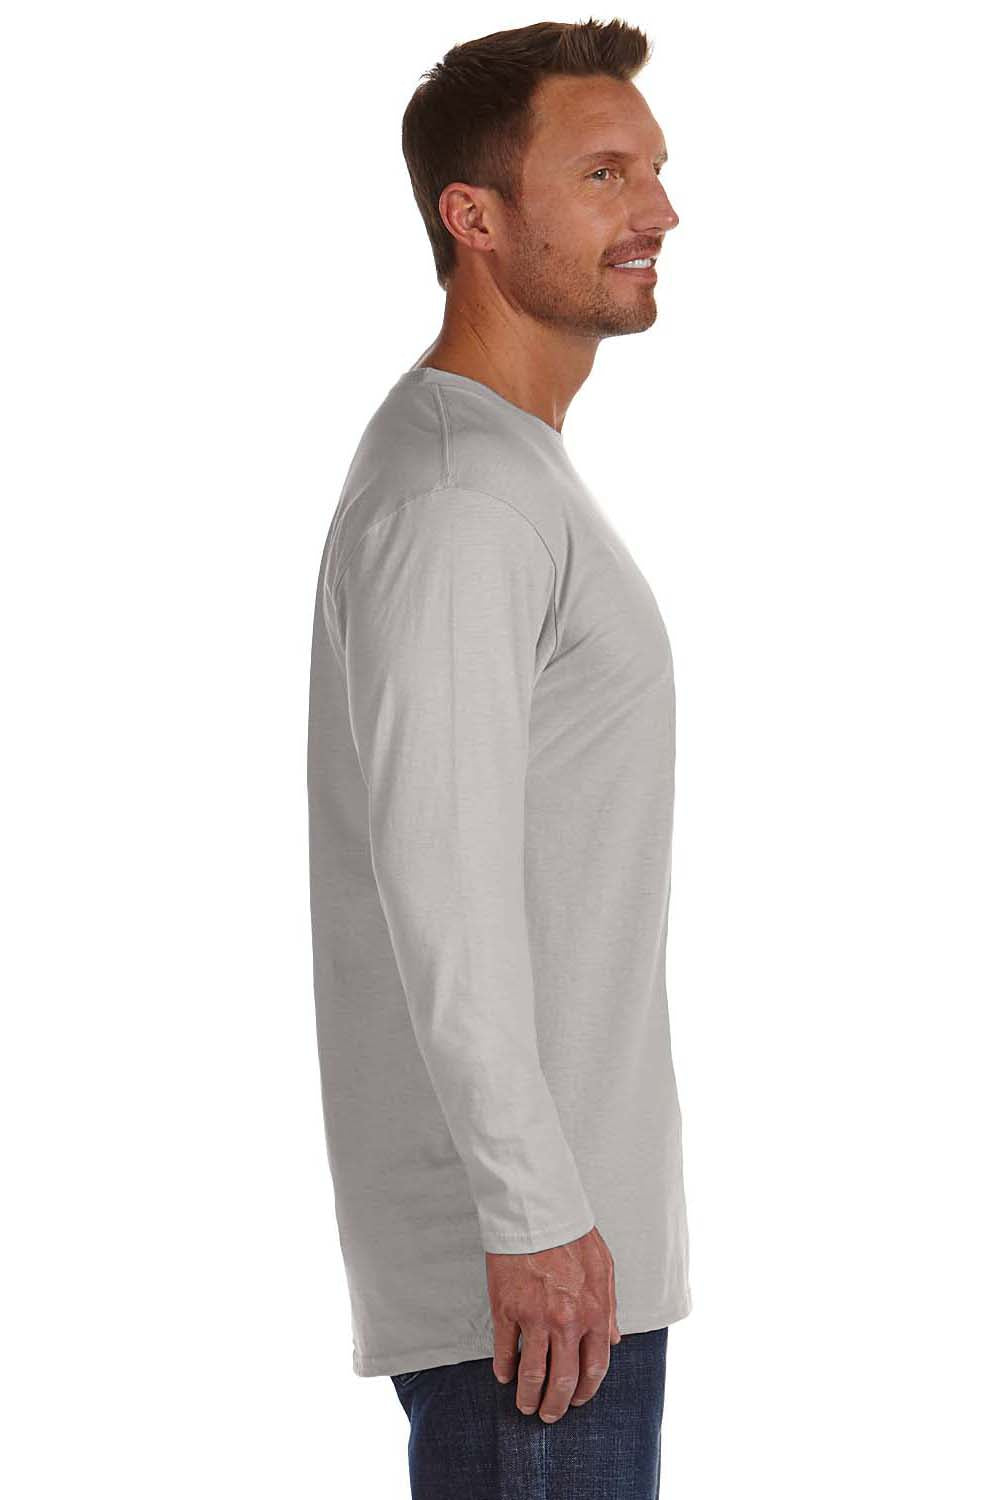 Hanes 498L Mens Nano-T Long Sleeve Crewneck T-Shirt Light Steel Grey Side